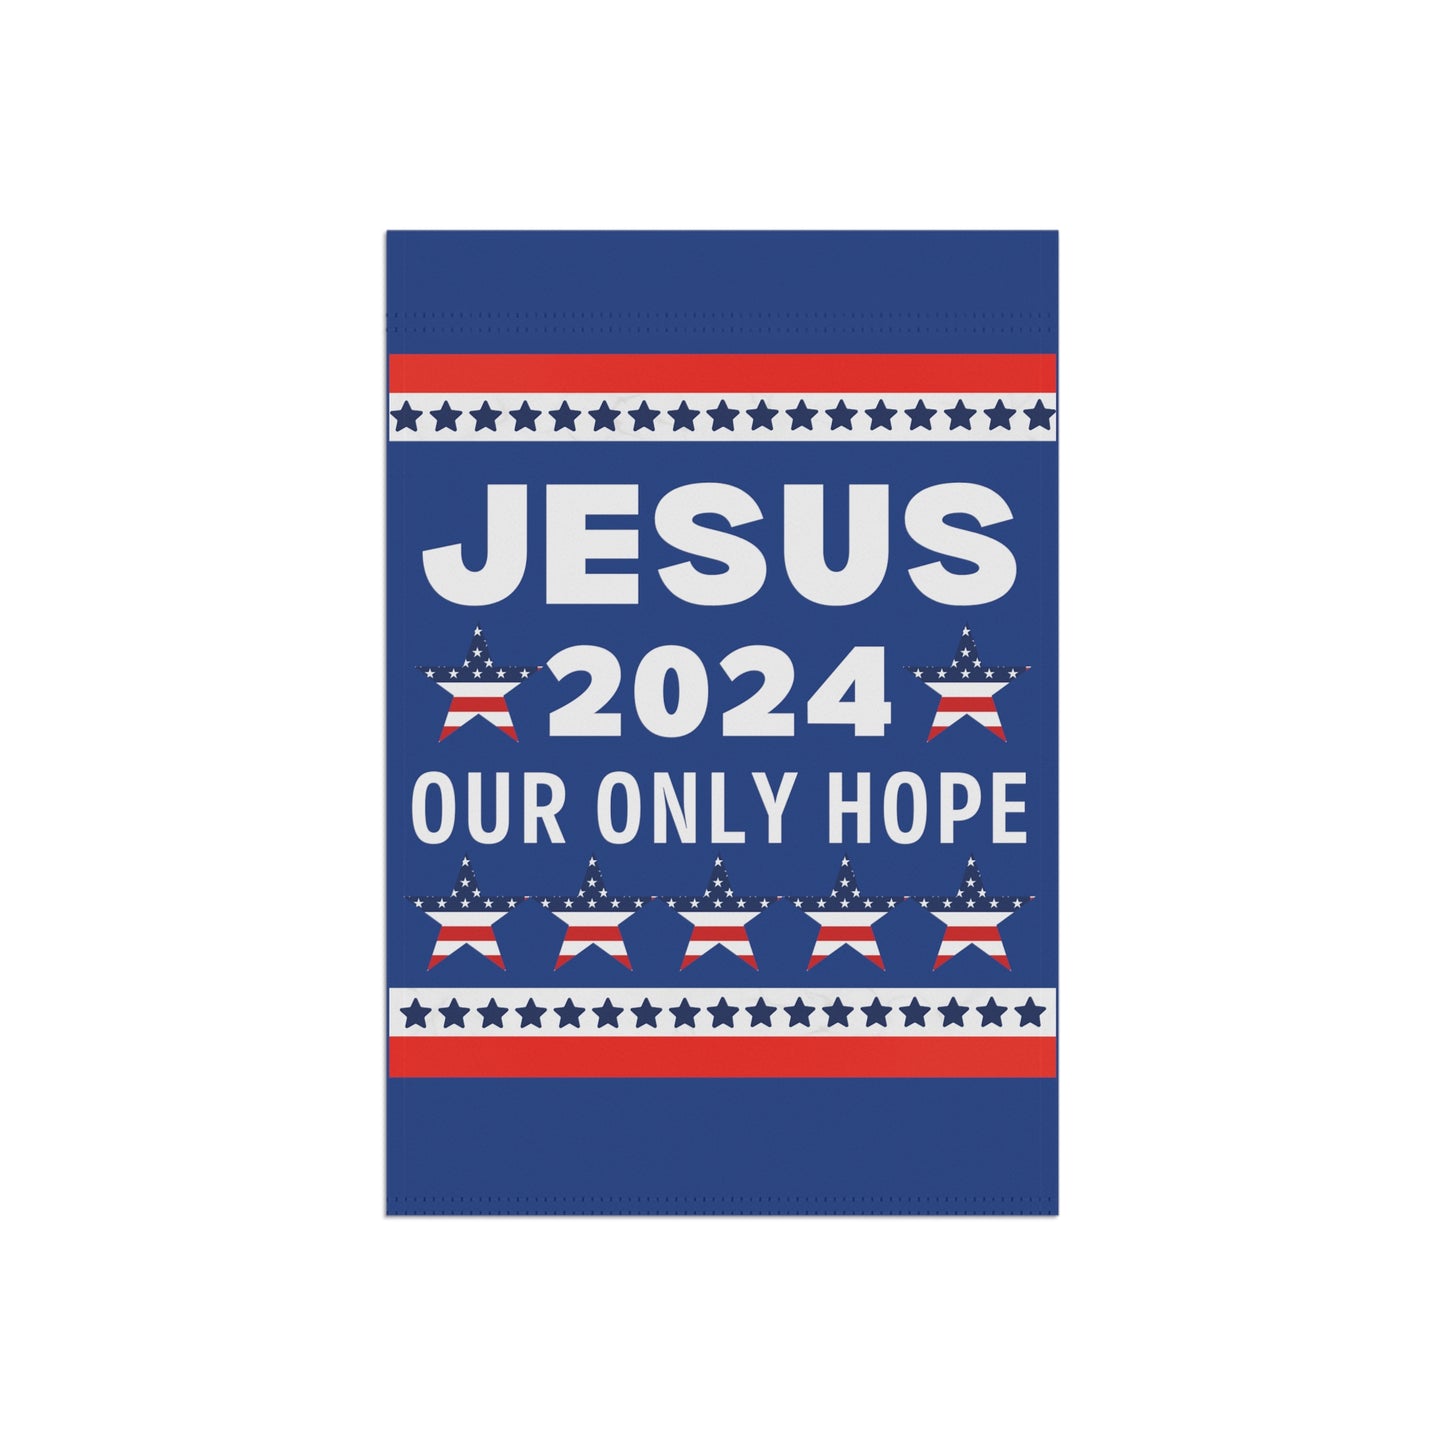 Jesus 2024 Our Only Hope Garden Flag Banner